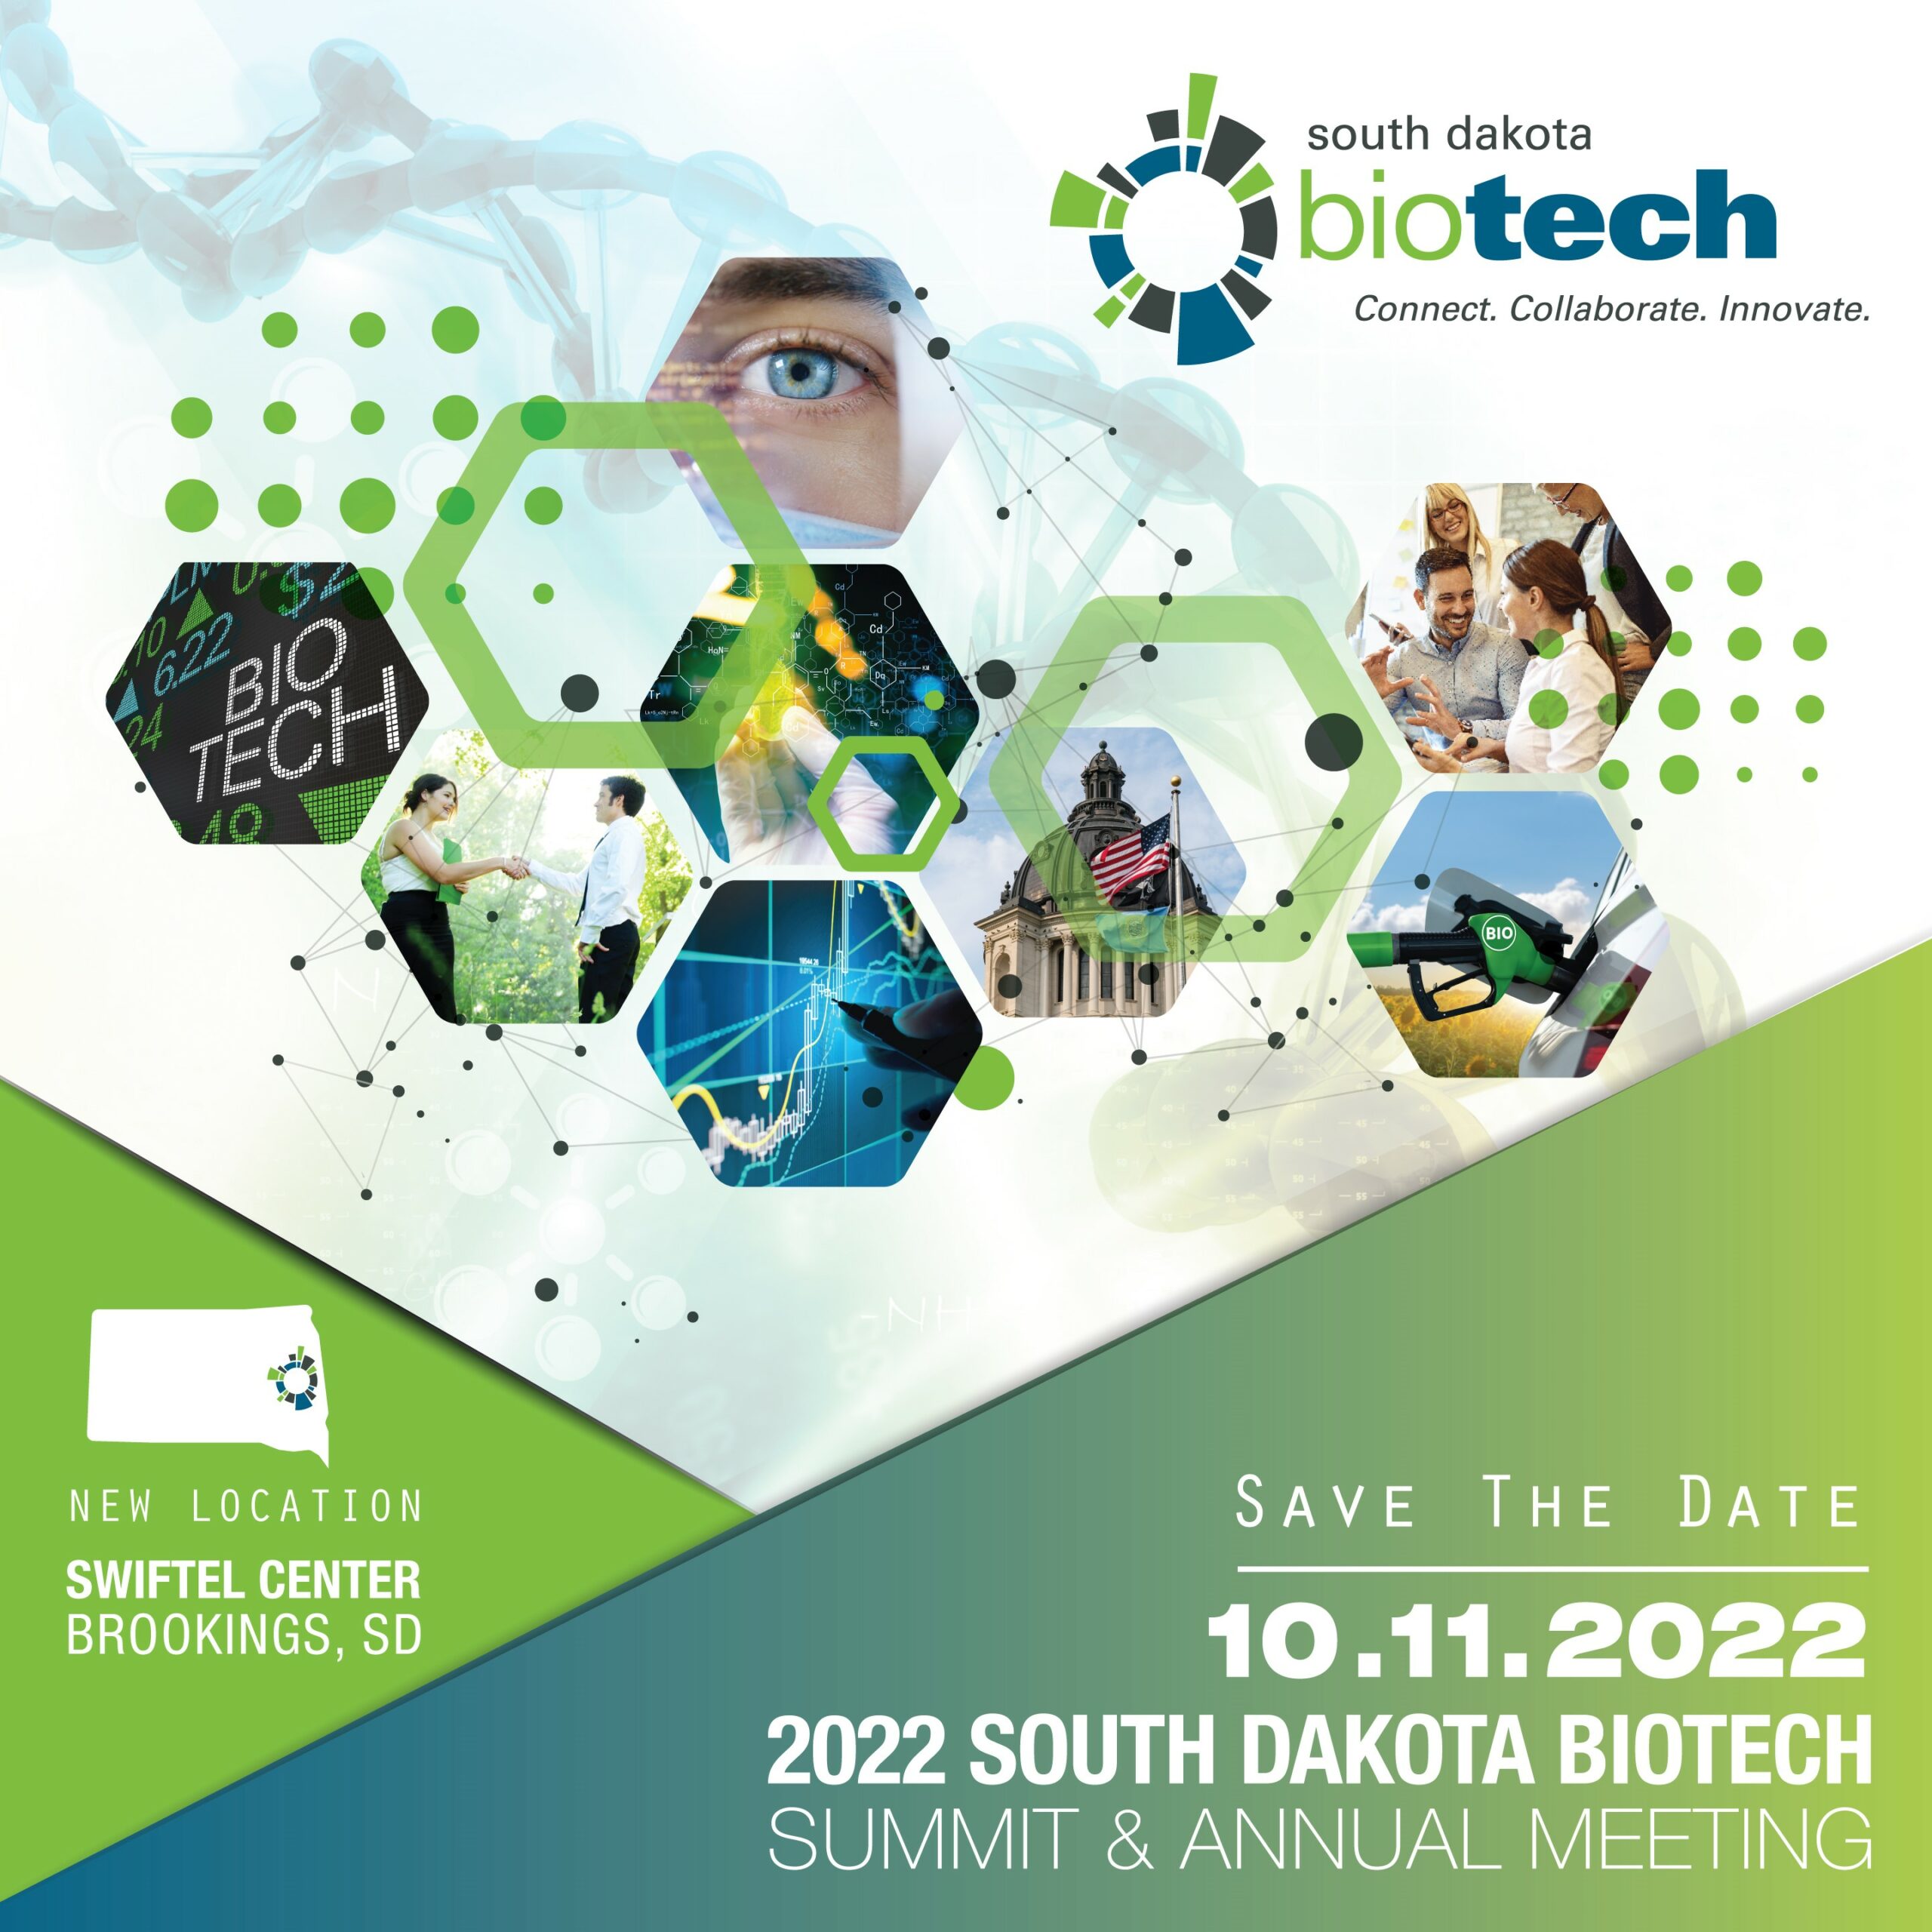 South Dakota Biotech Summit and Annual Meeting